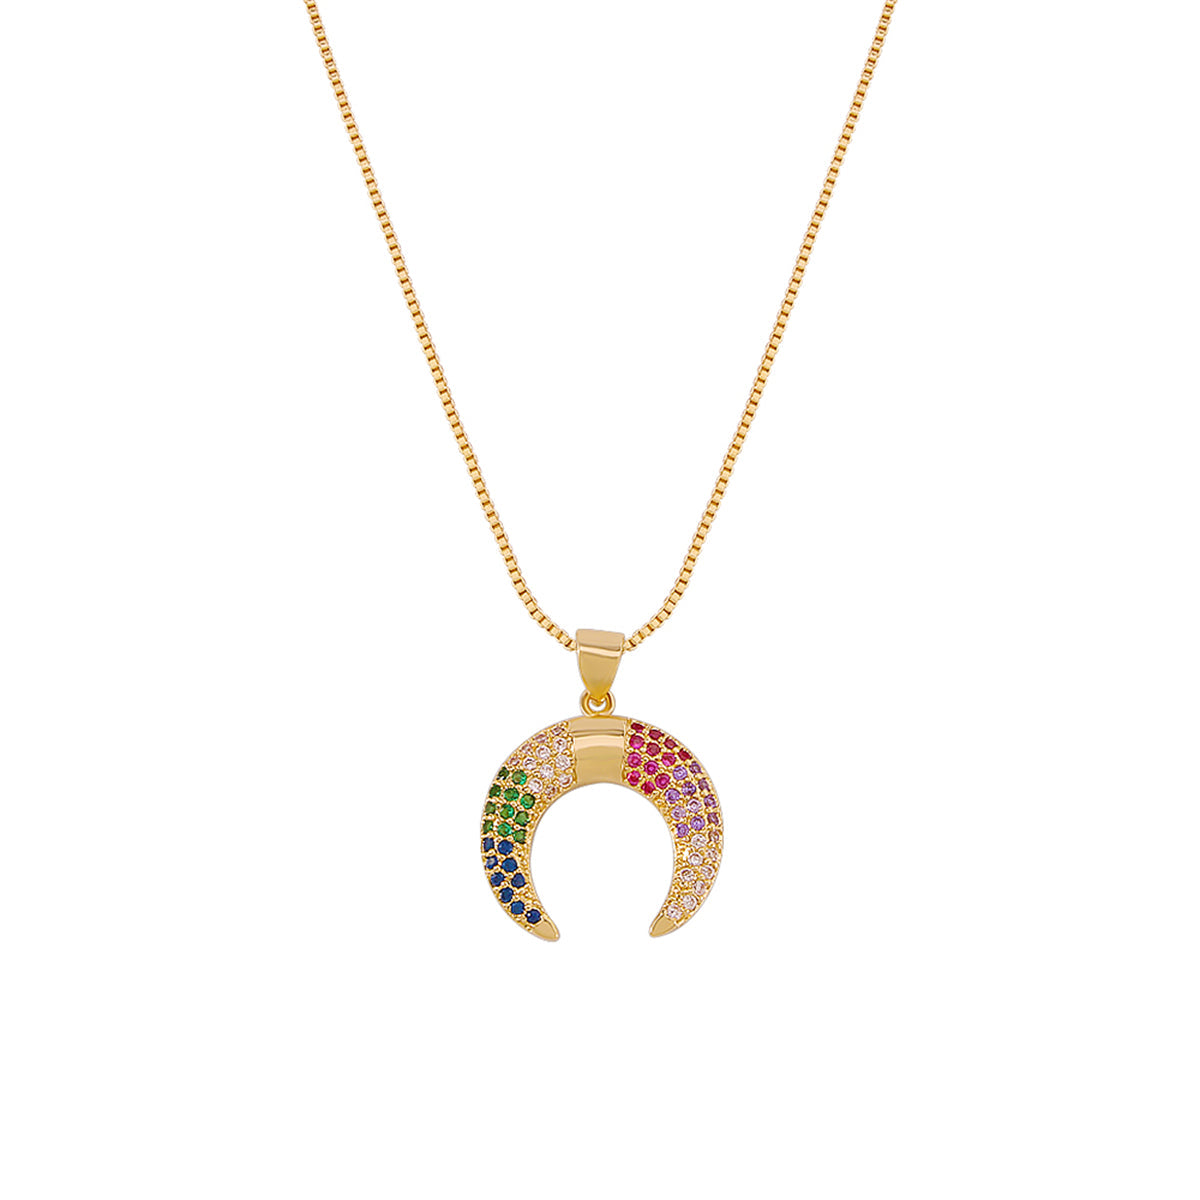 Multicolor Cubic Zirconia & 18K Gold-Plated Crescent Moon Pendant Necklace